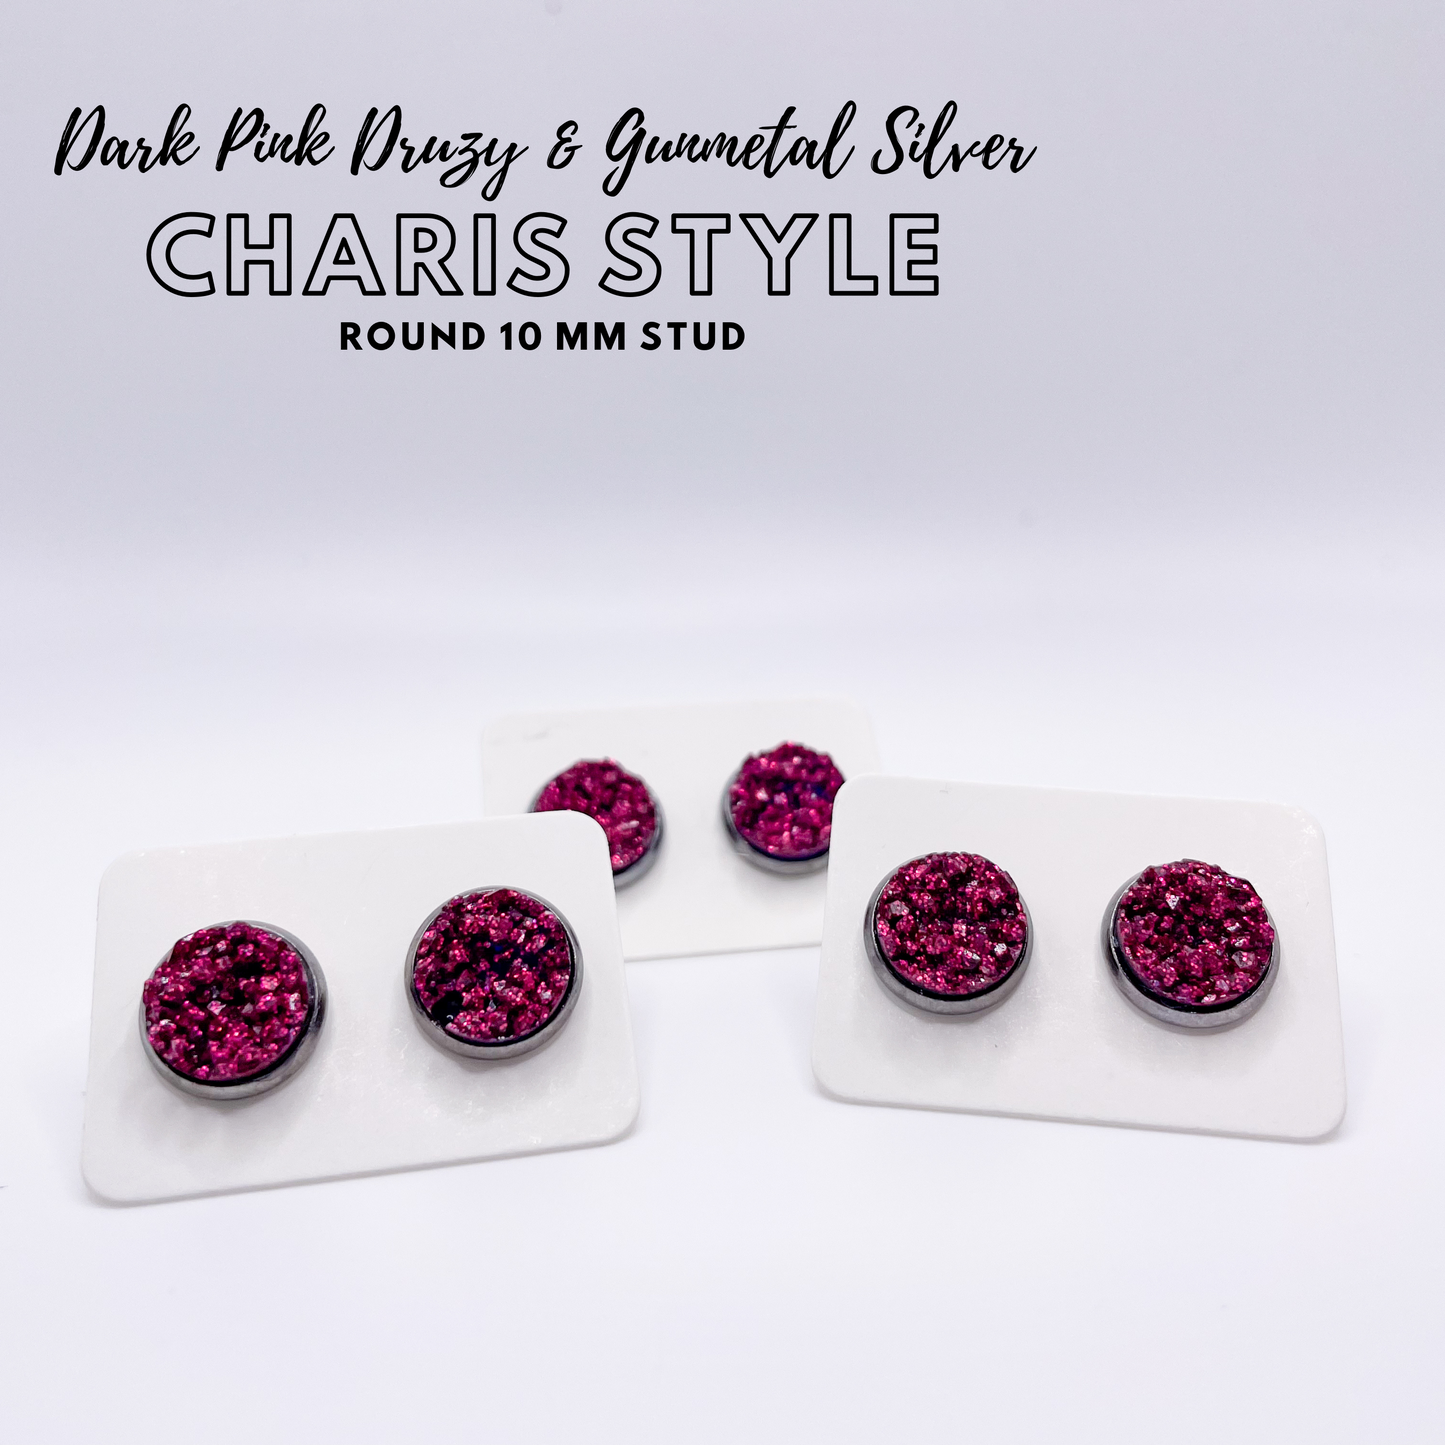 Charis Style - 10 MM Studs - Dark Pink Druzy and Gunmetal Silver